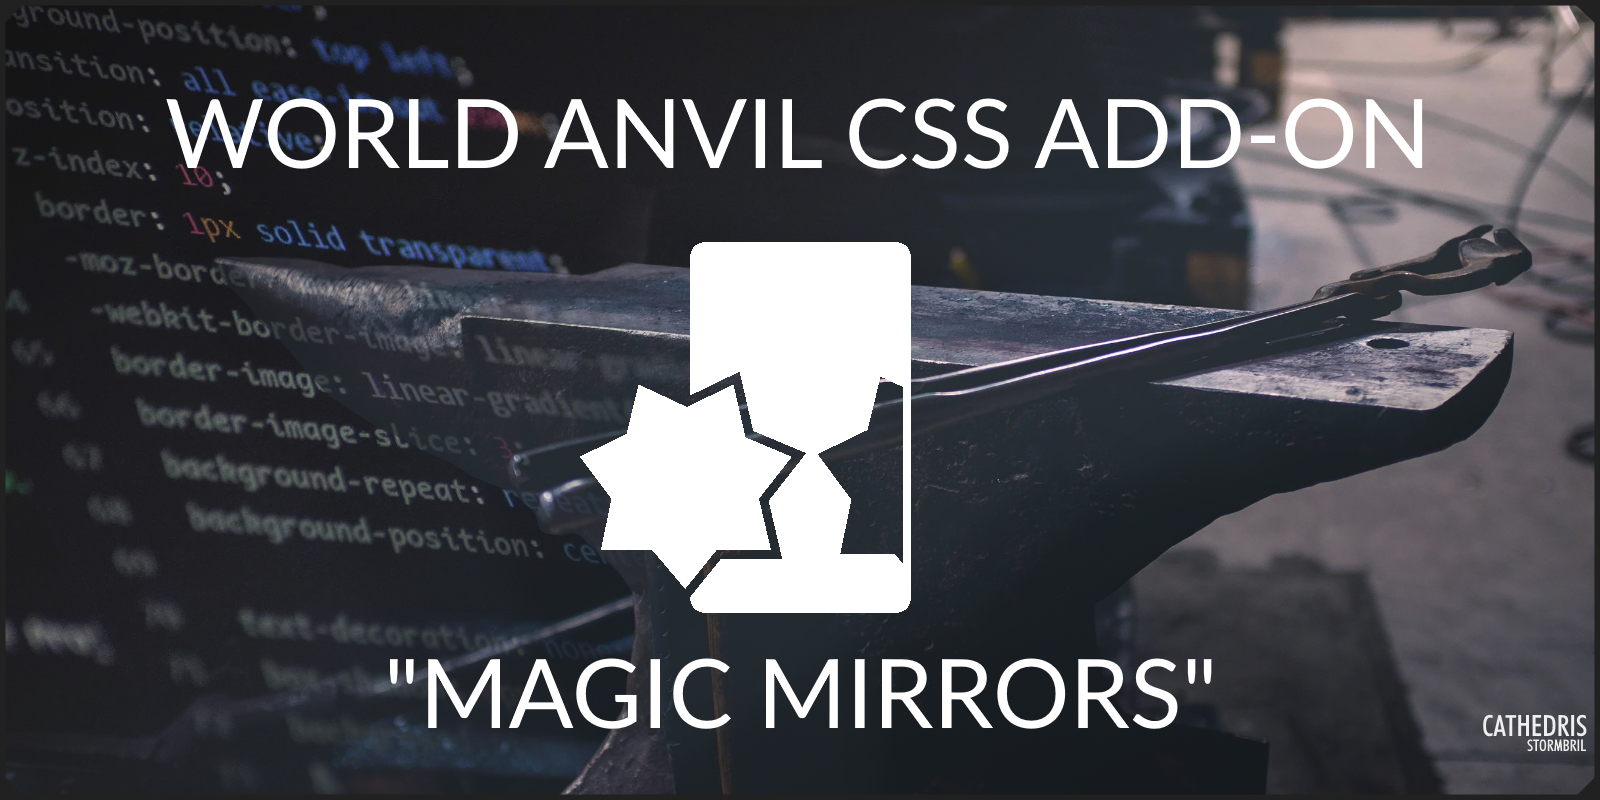 World Anvil CSS add-on: Magic Mirrors